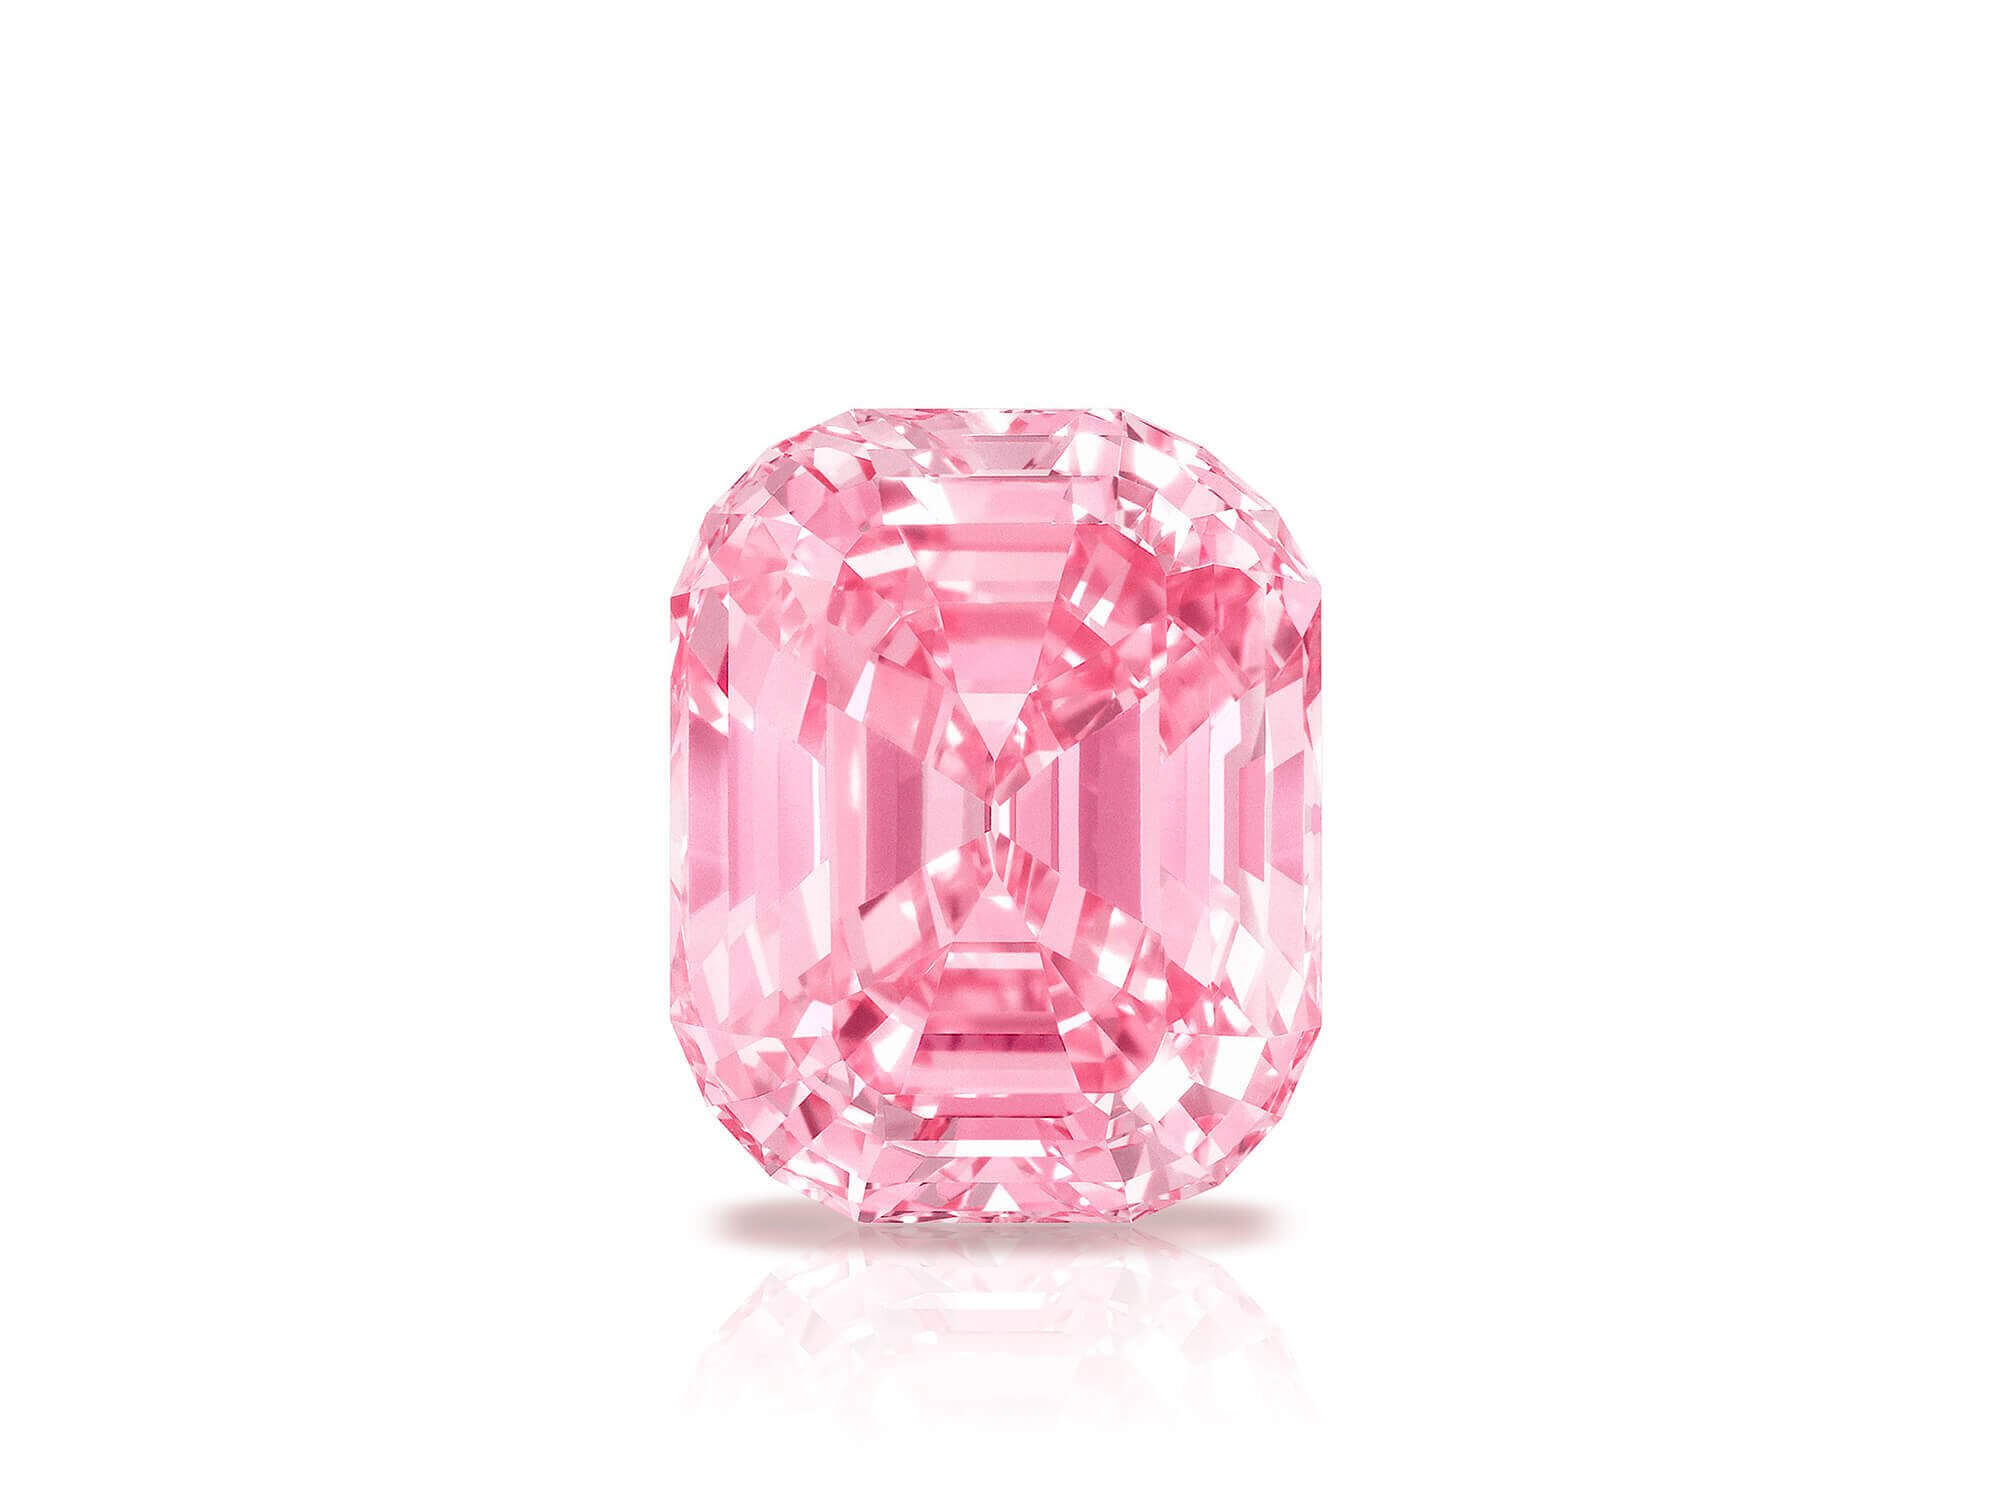 The Graff Pink - a 23.88 carats Fancy Vivid Pink Internally Flawless Type IIa diamond